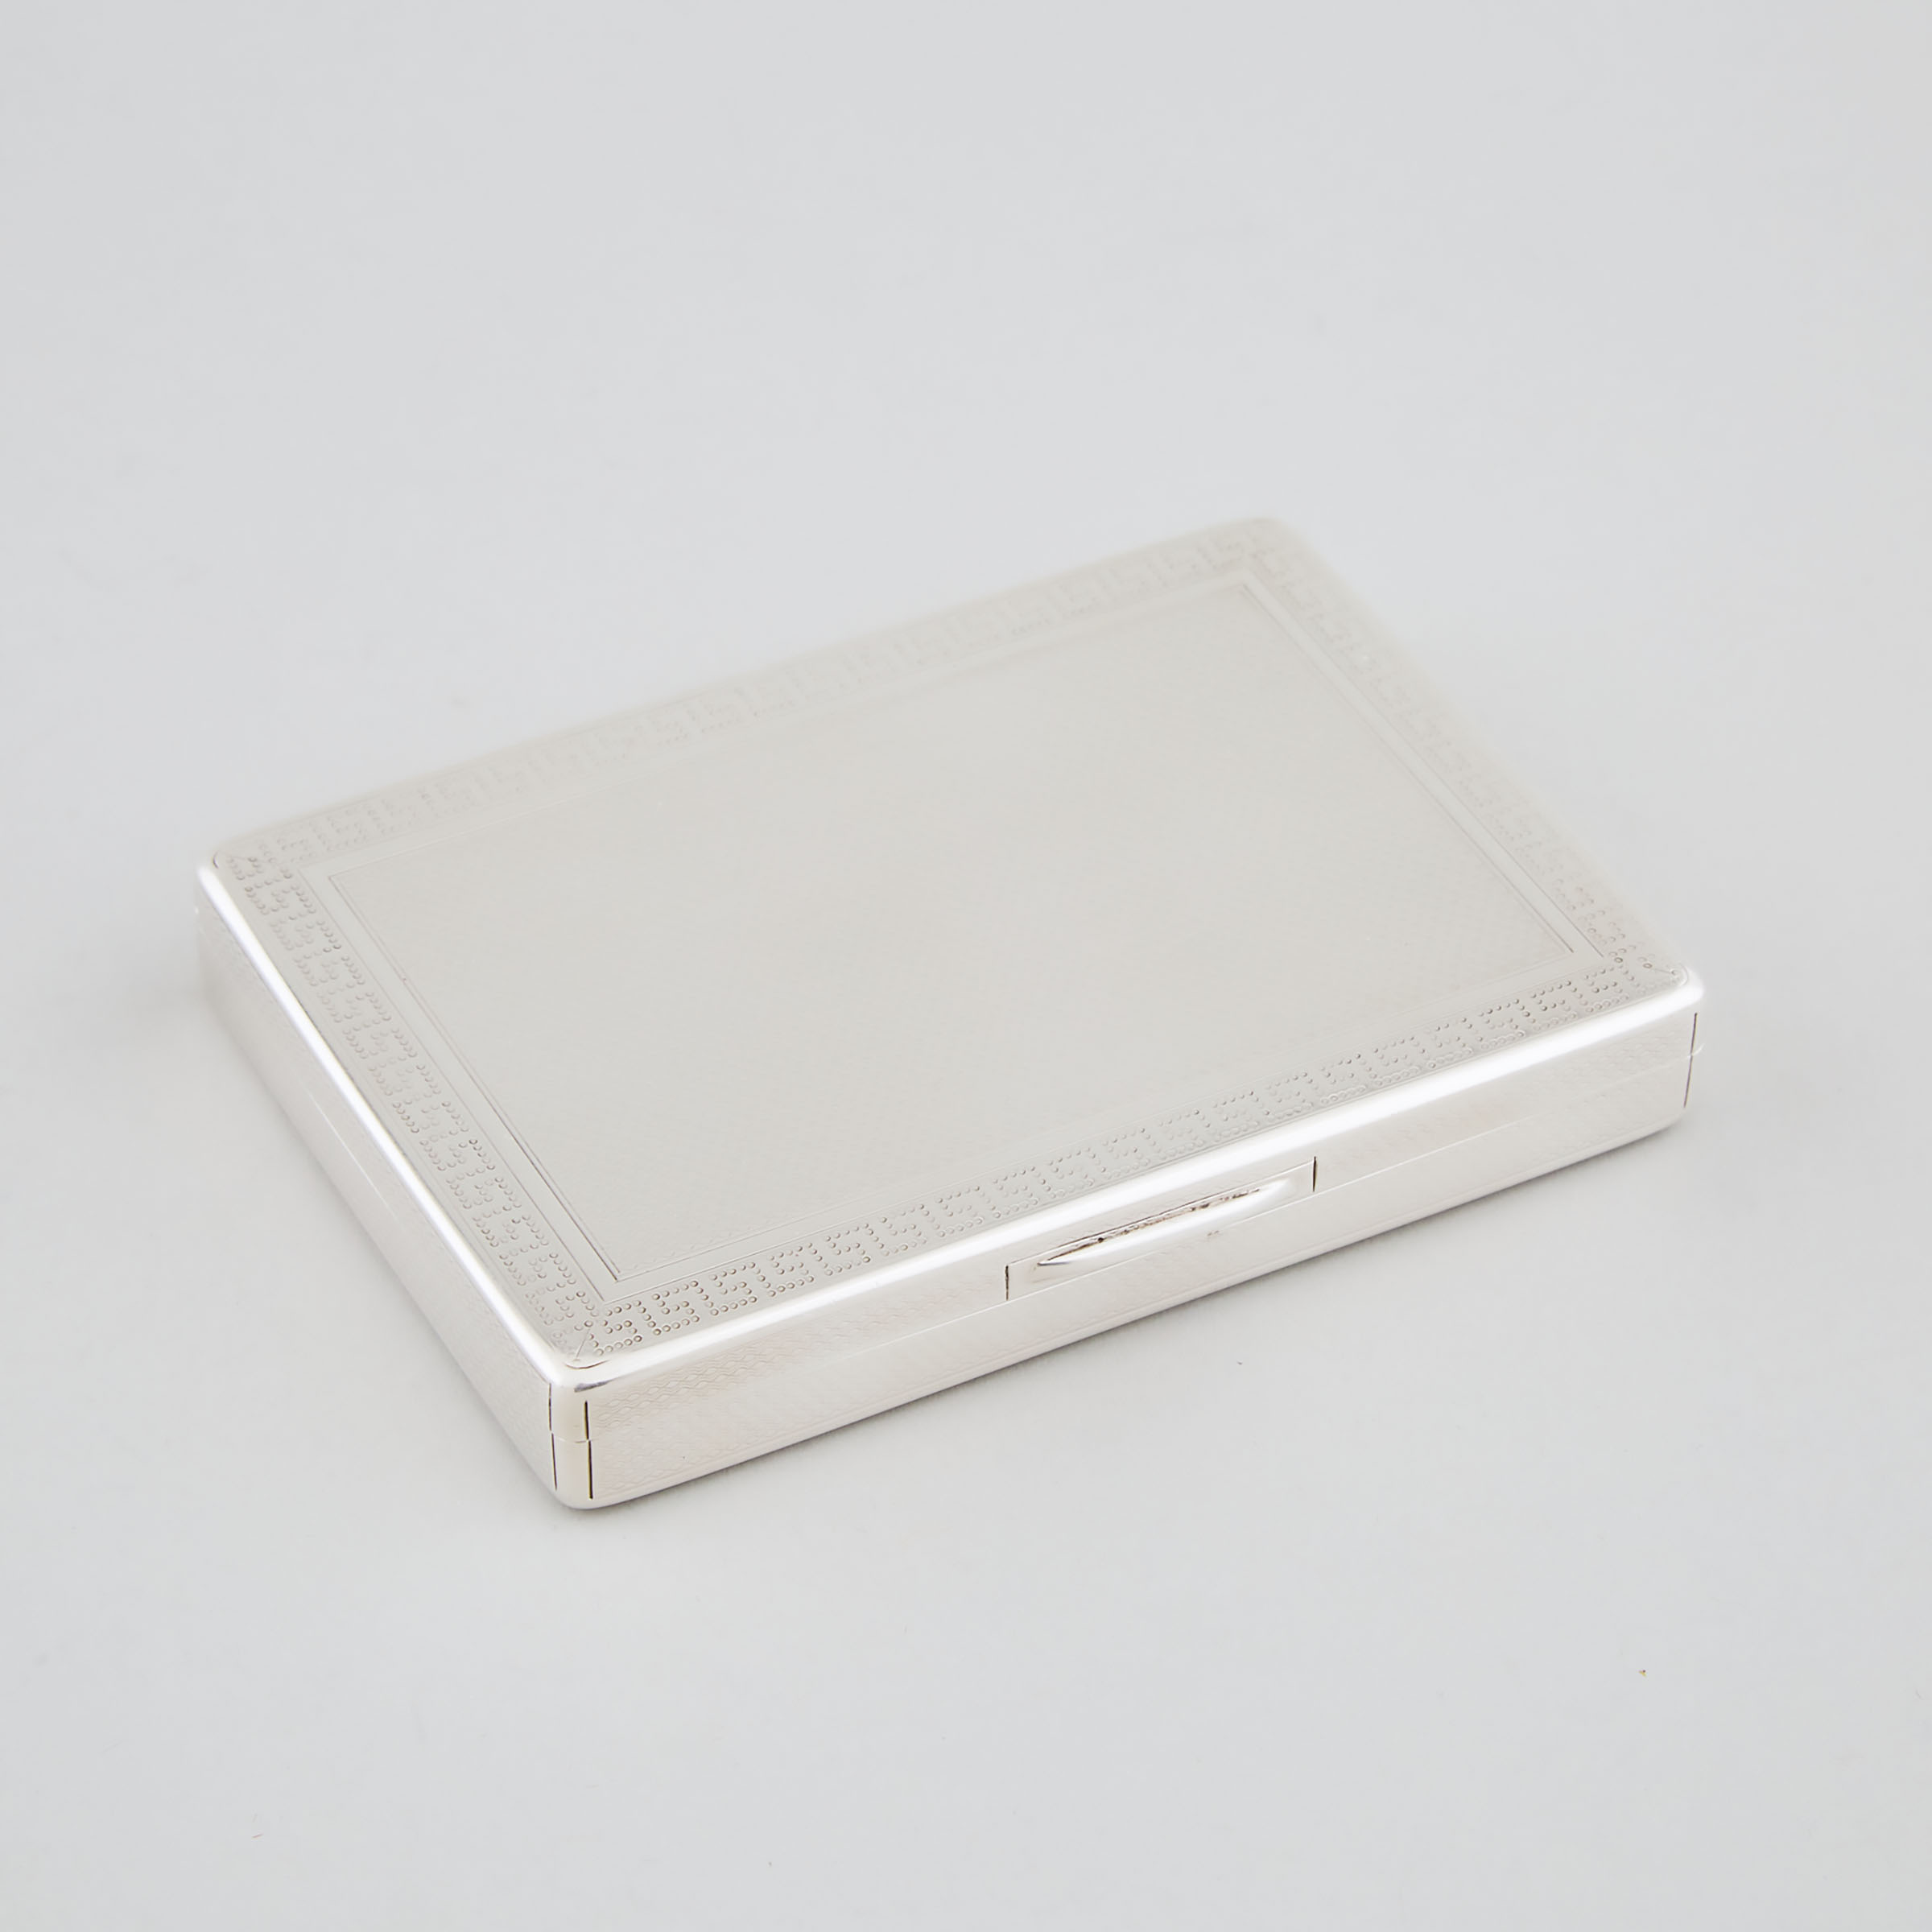 English Silver Rectangular Cigarette Box, J.W. Benson Ltd., London, 1919